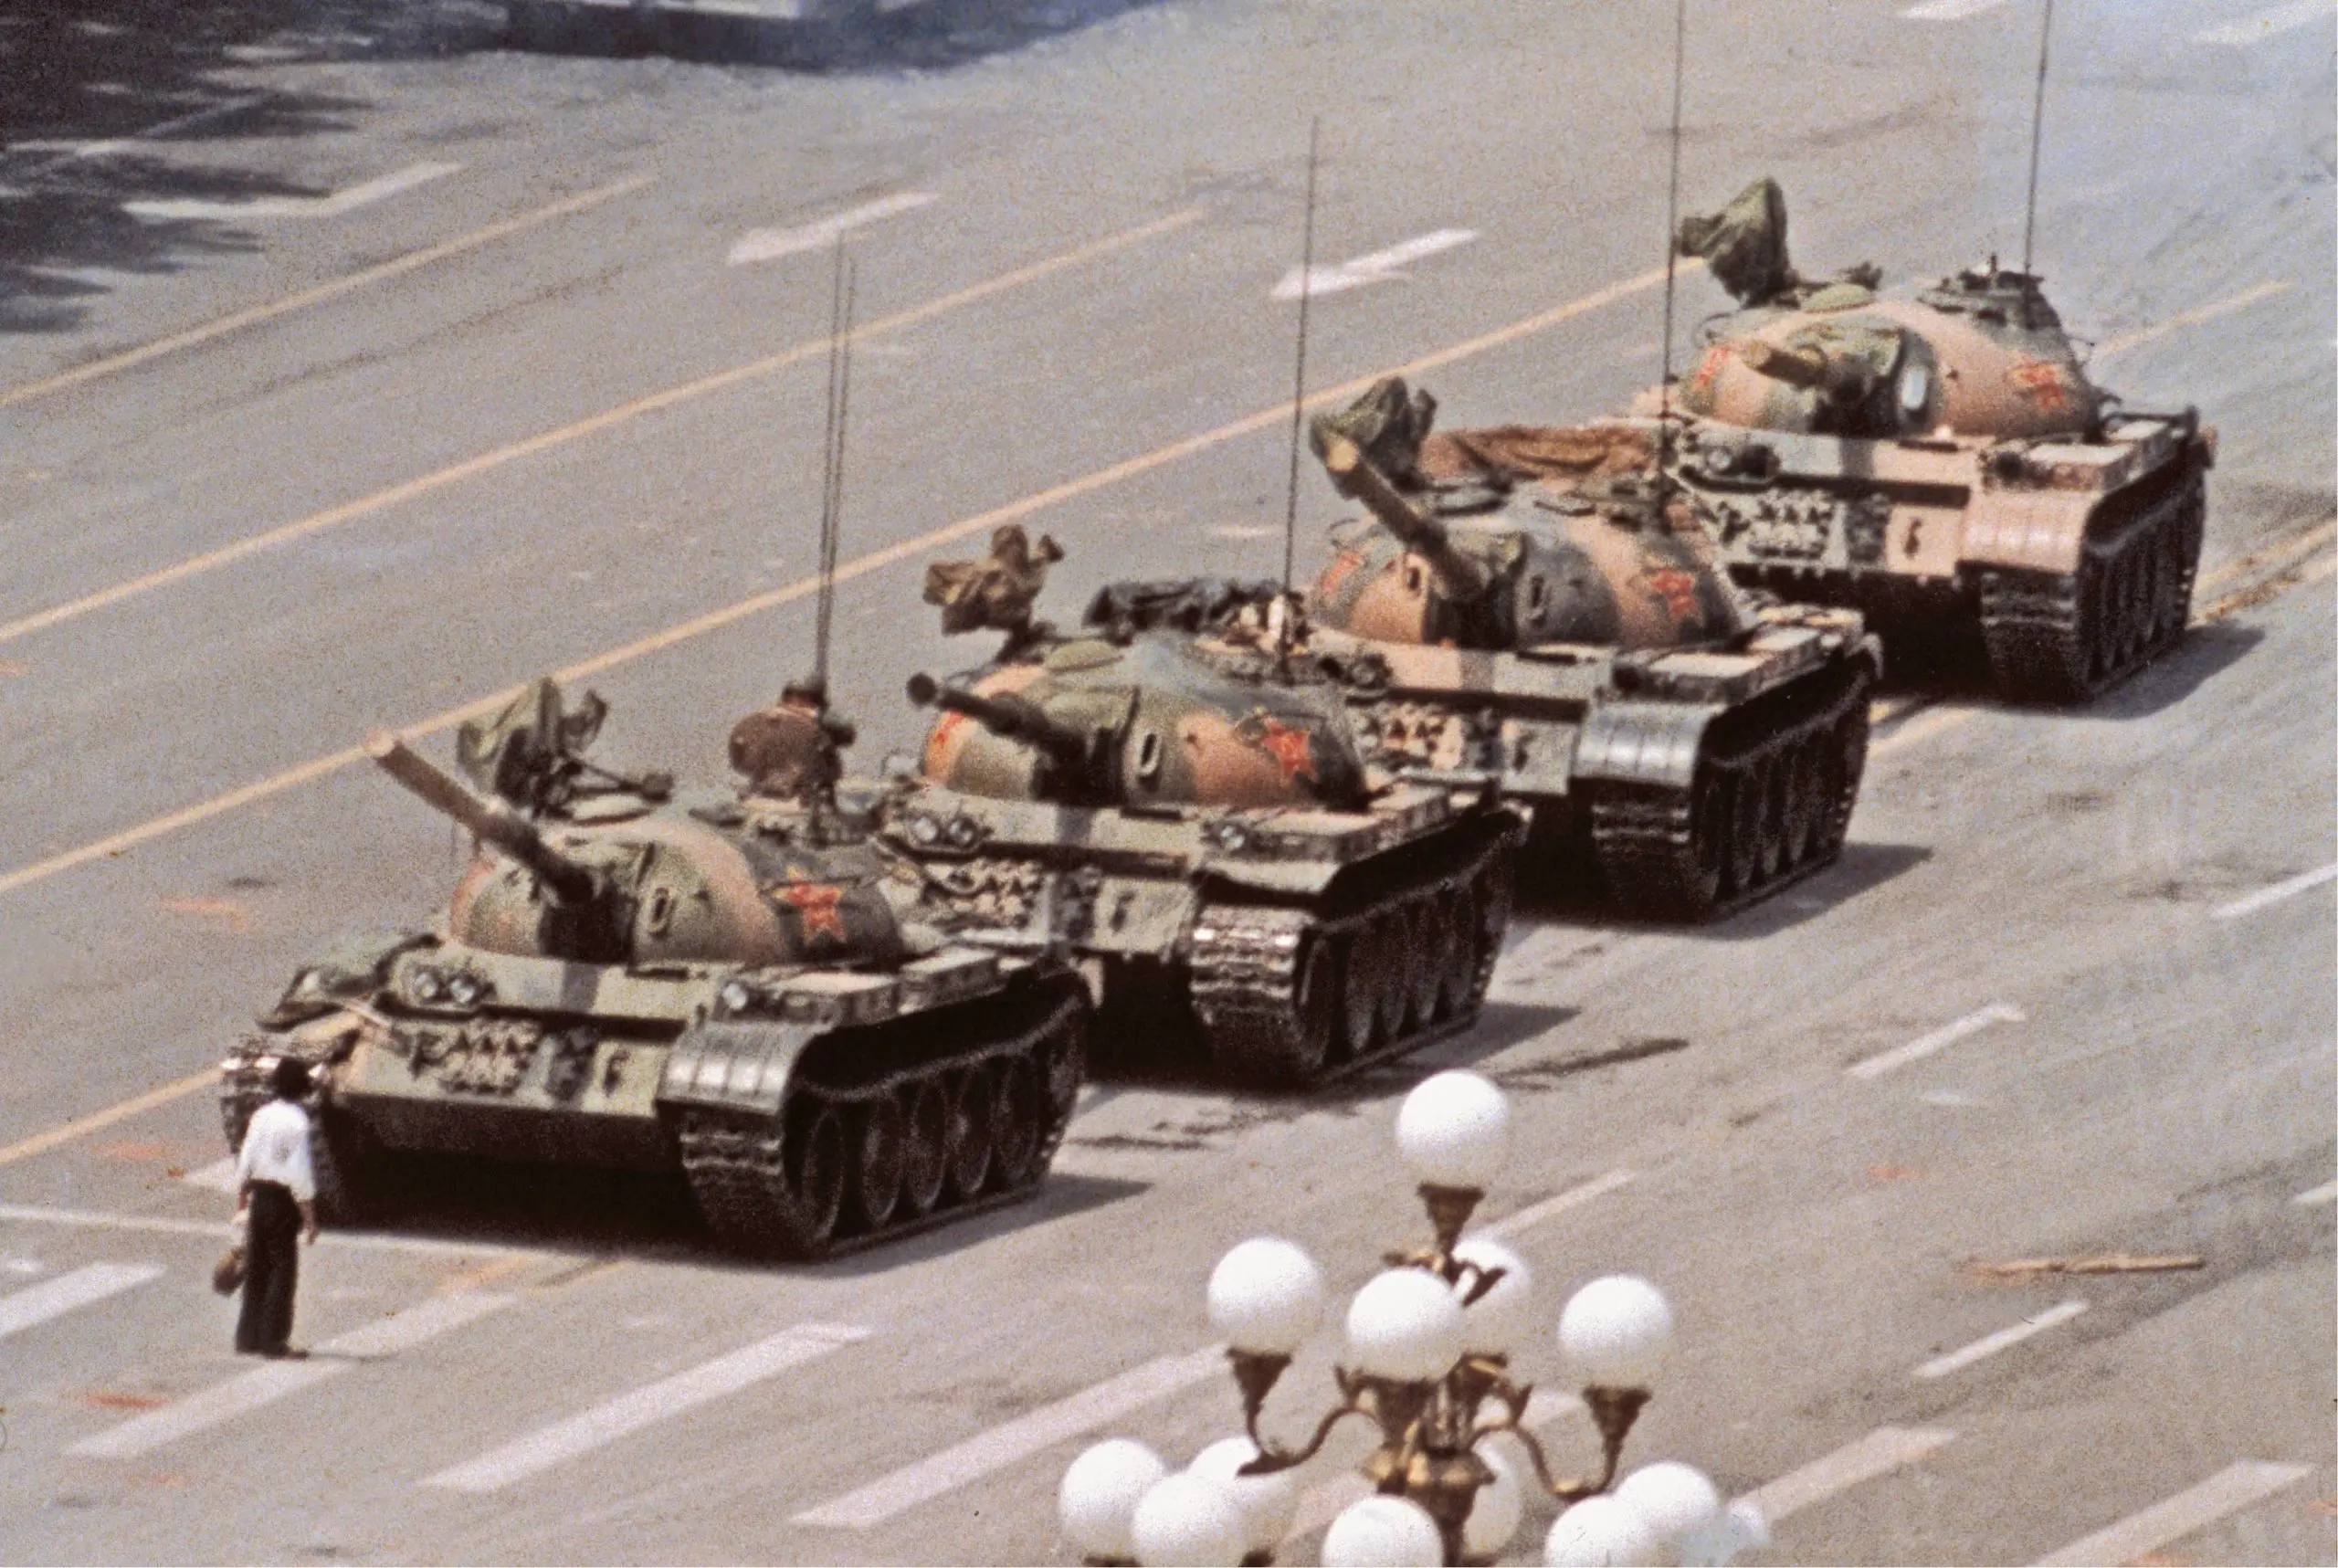 L’histoire de la photo “Tank Man” devenue l’icône de Tiananmen